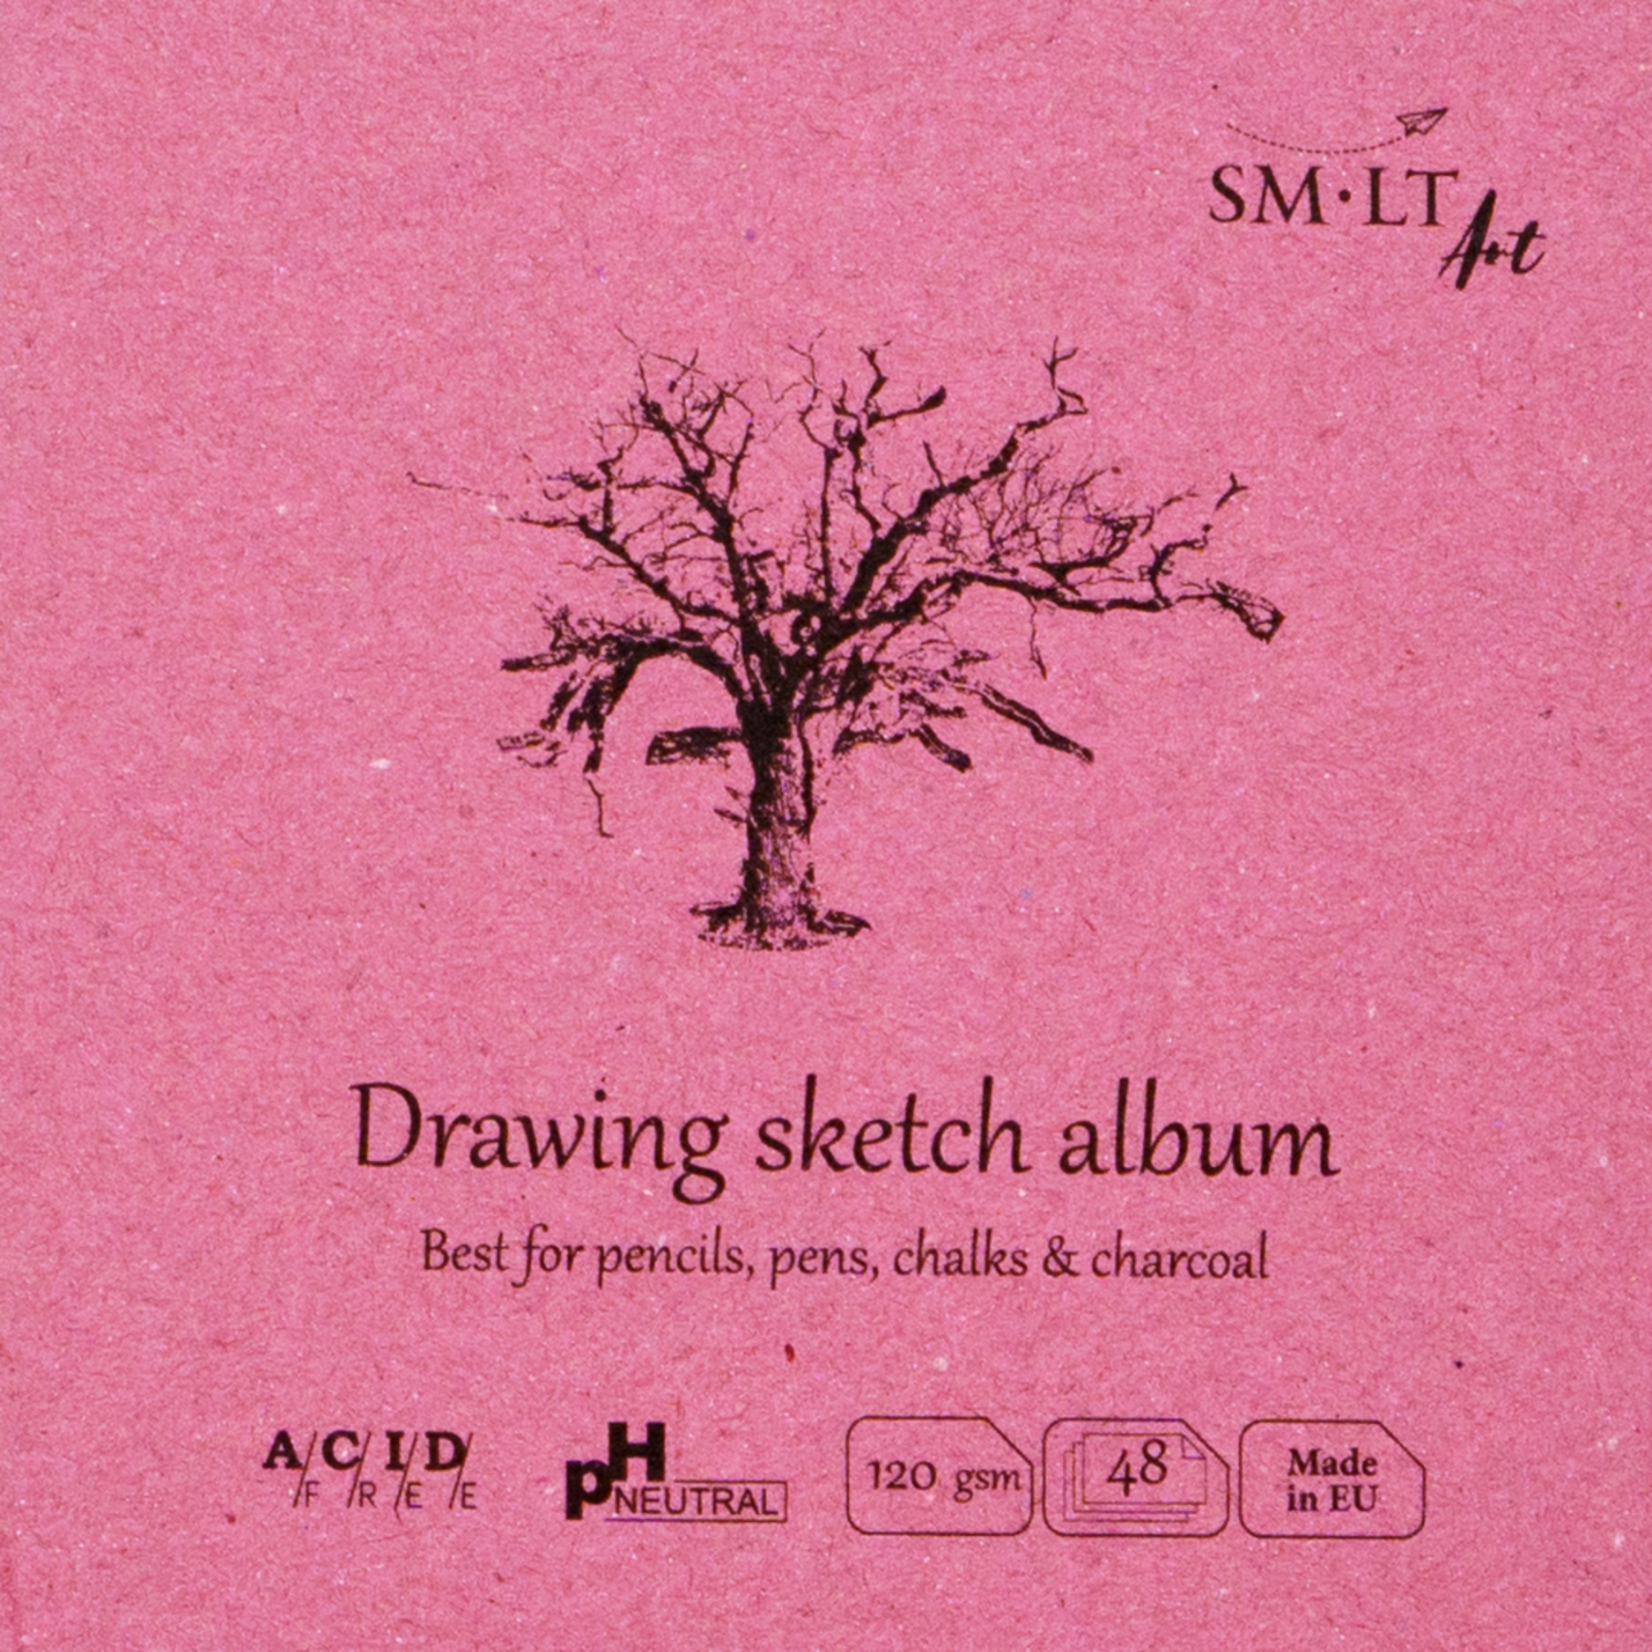 SM-LT ART LAY FLAT SKETCH ALBUM 6X6 DRAWING